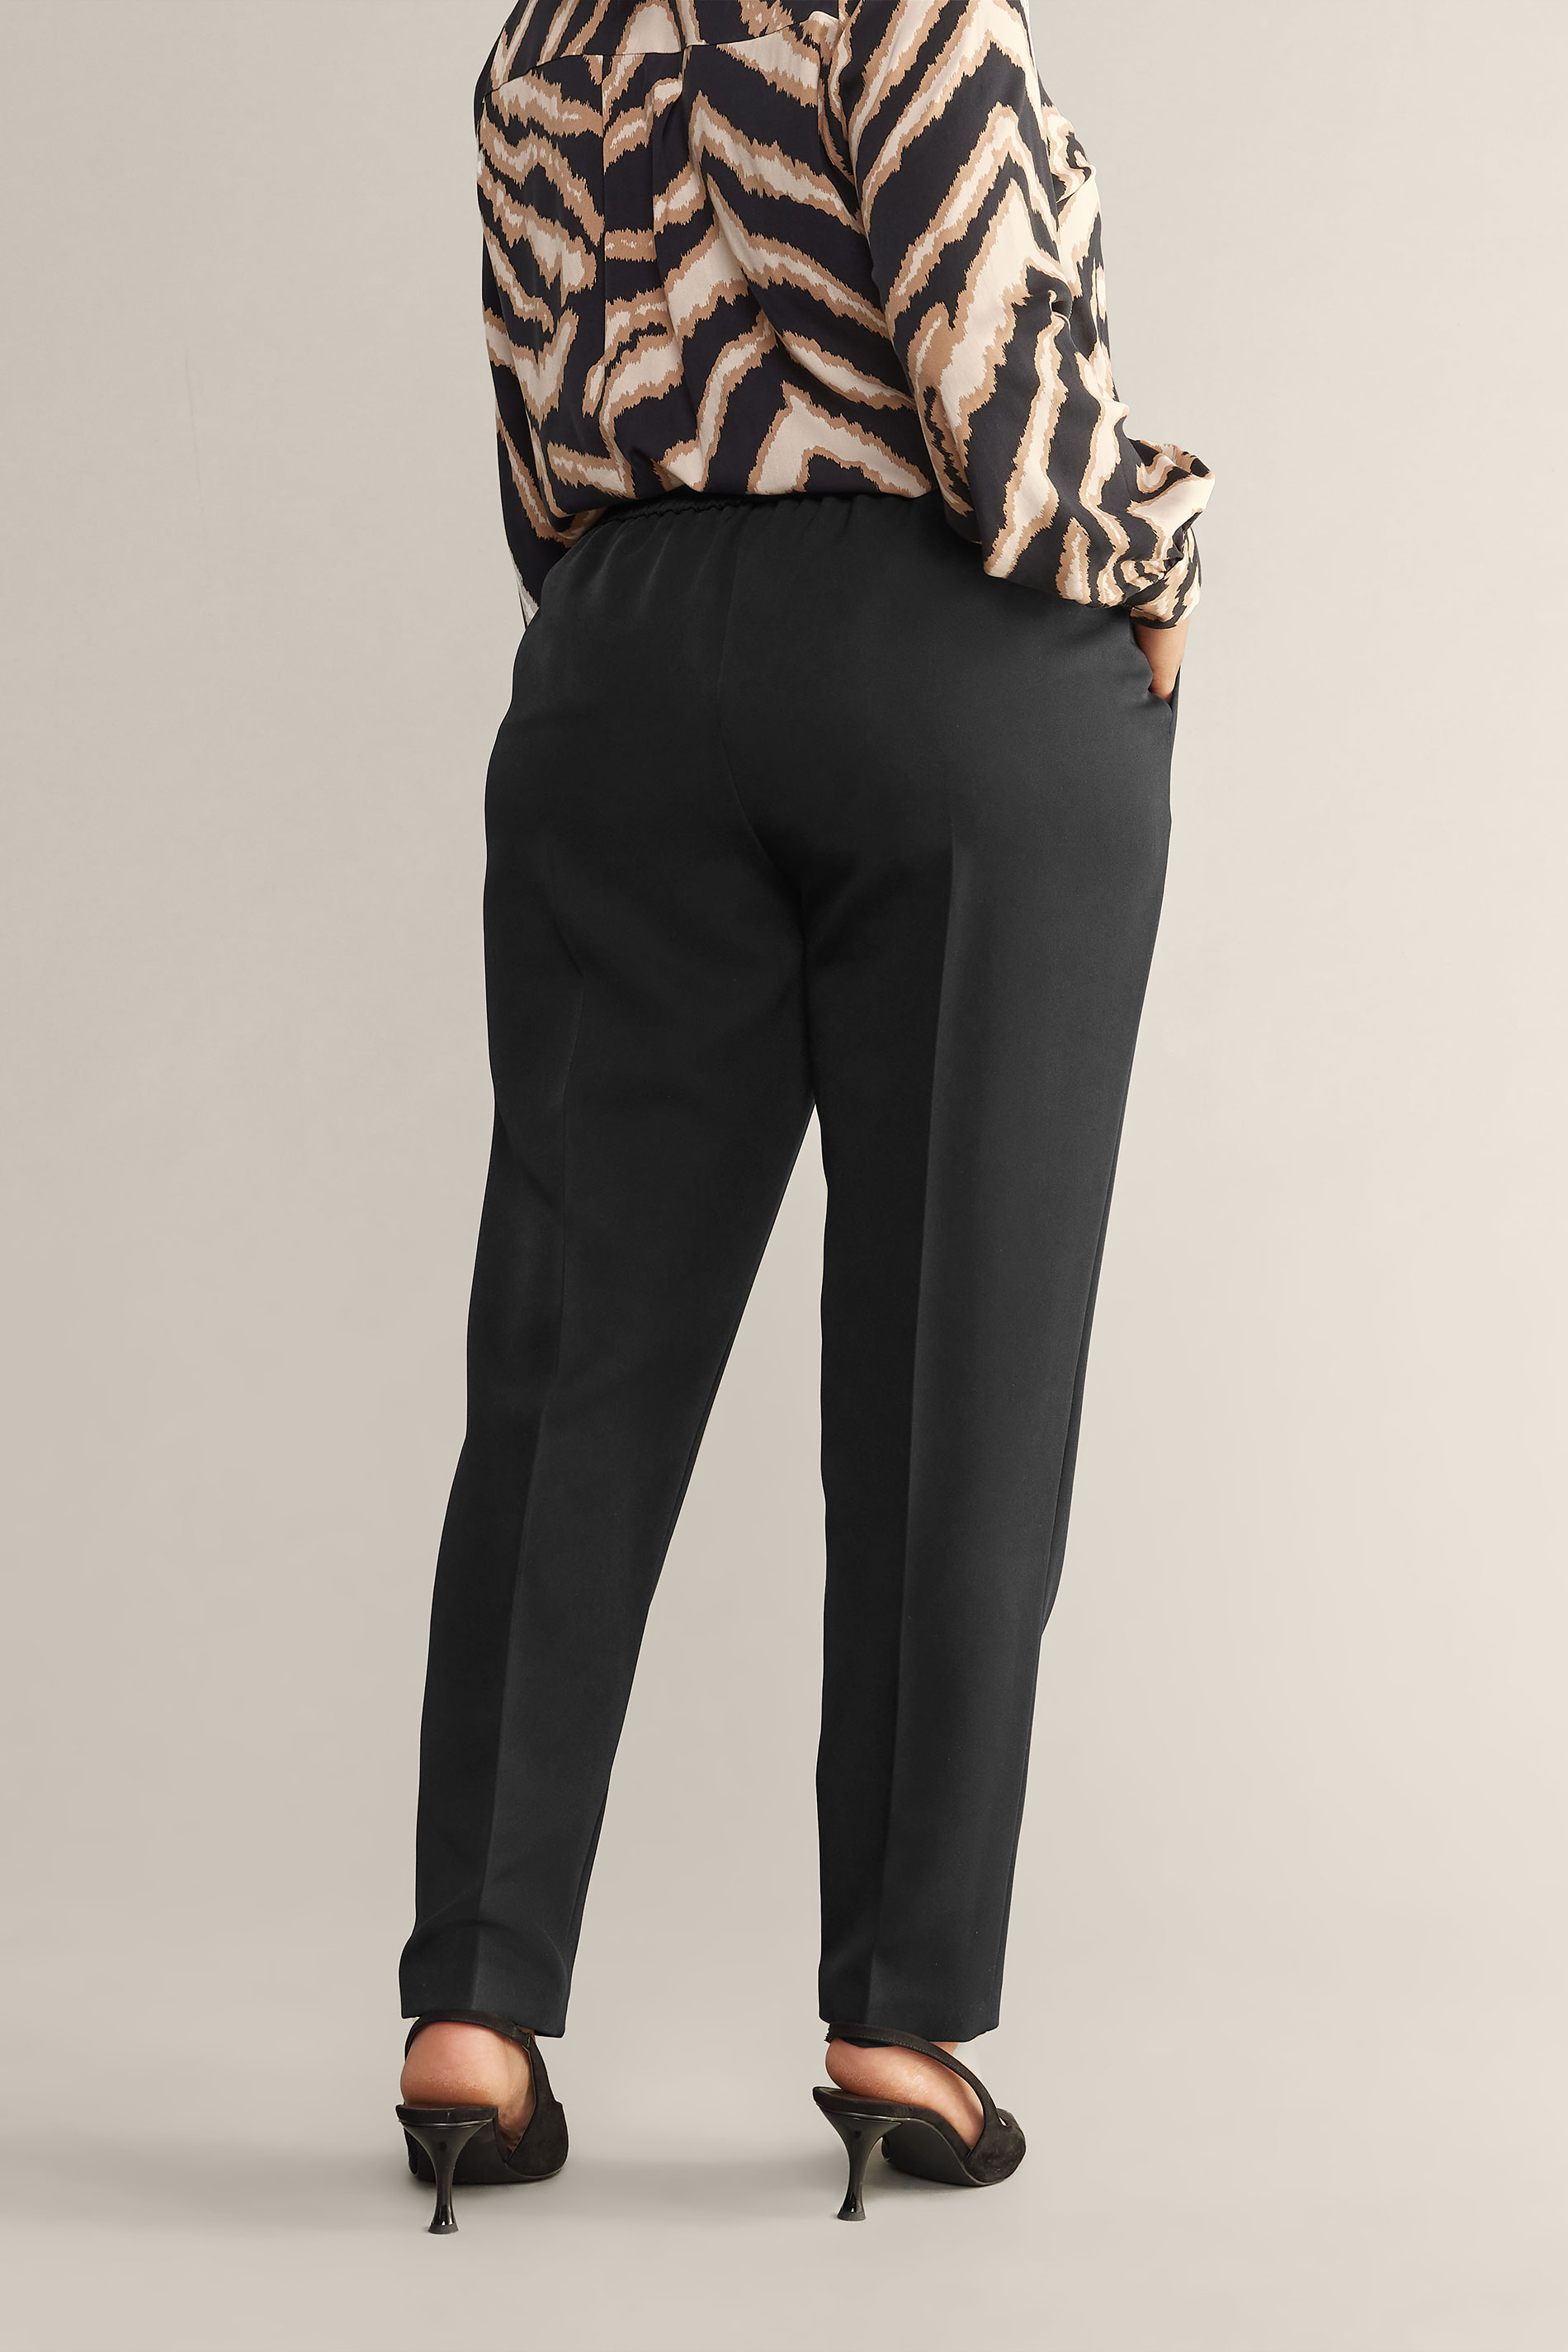 EVANS Plus Size Black Tapered Trouser | Evans 3